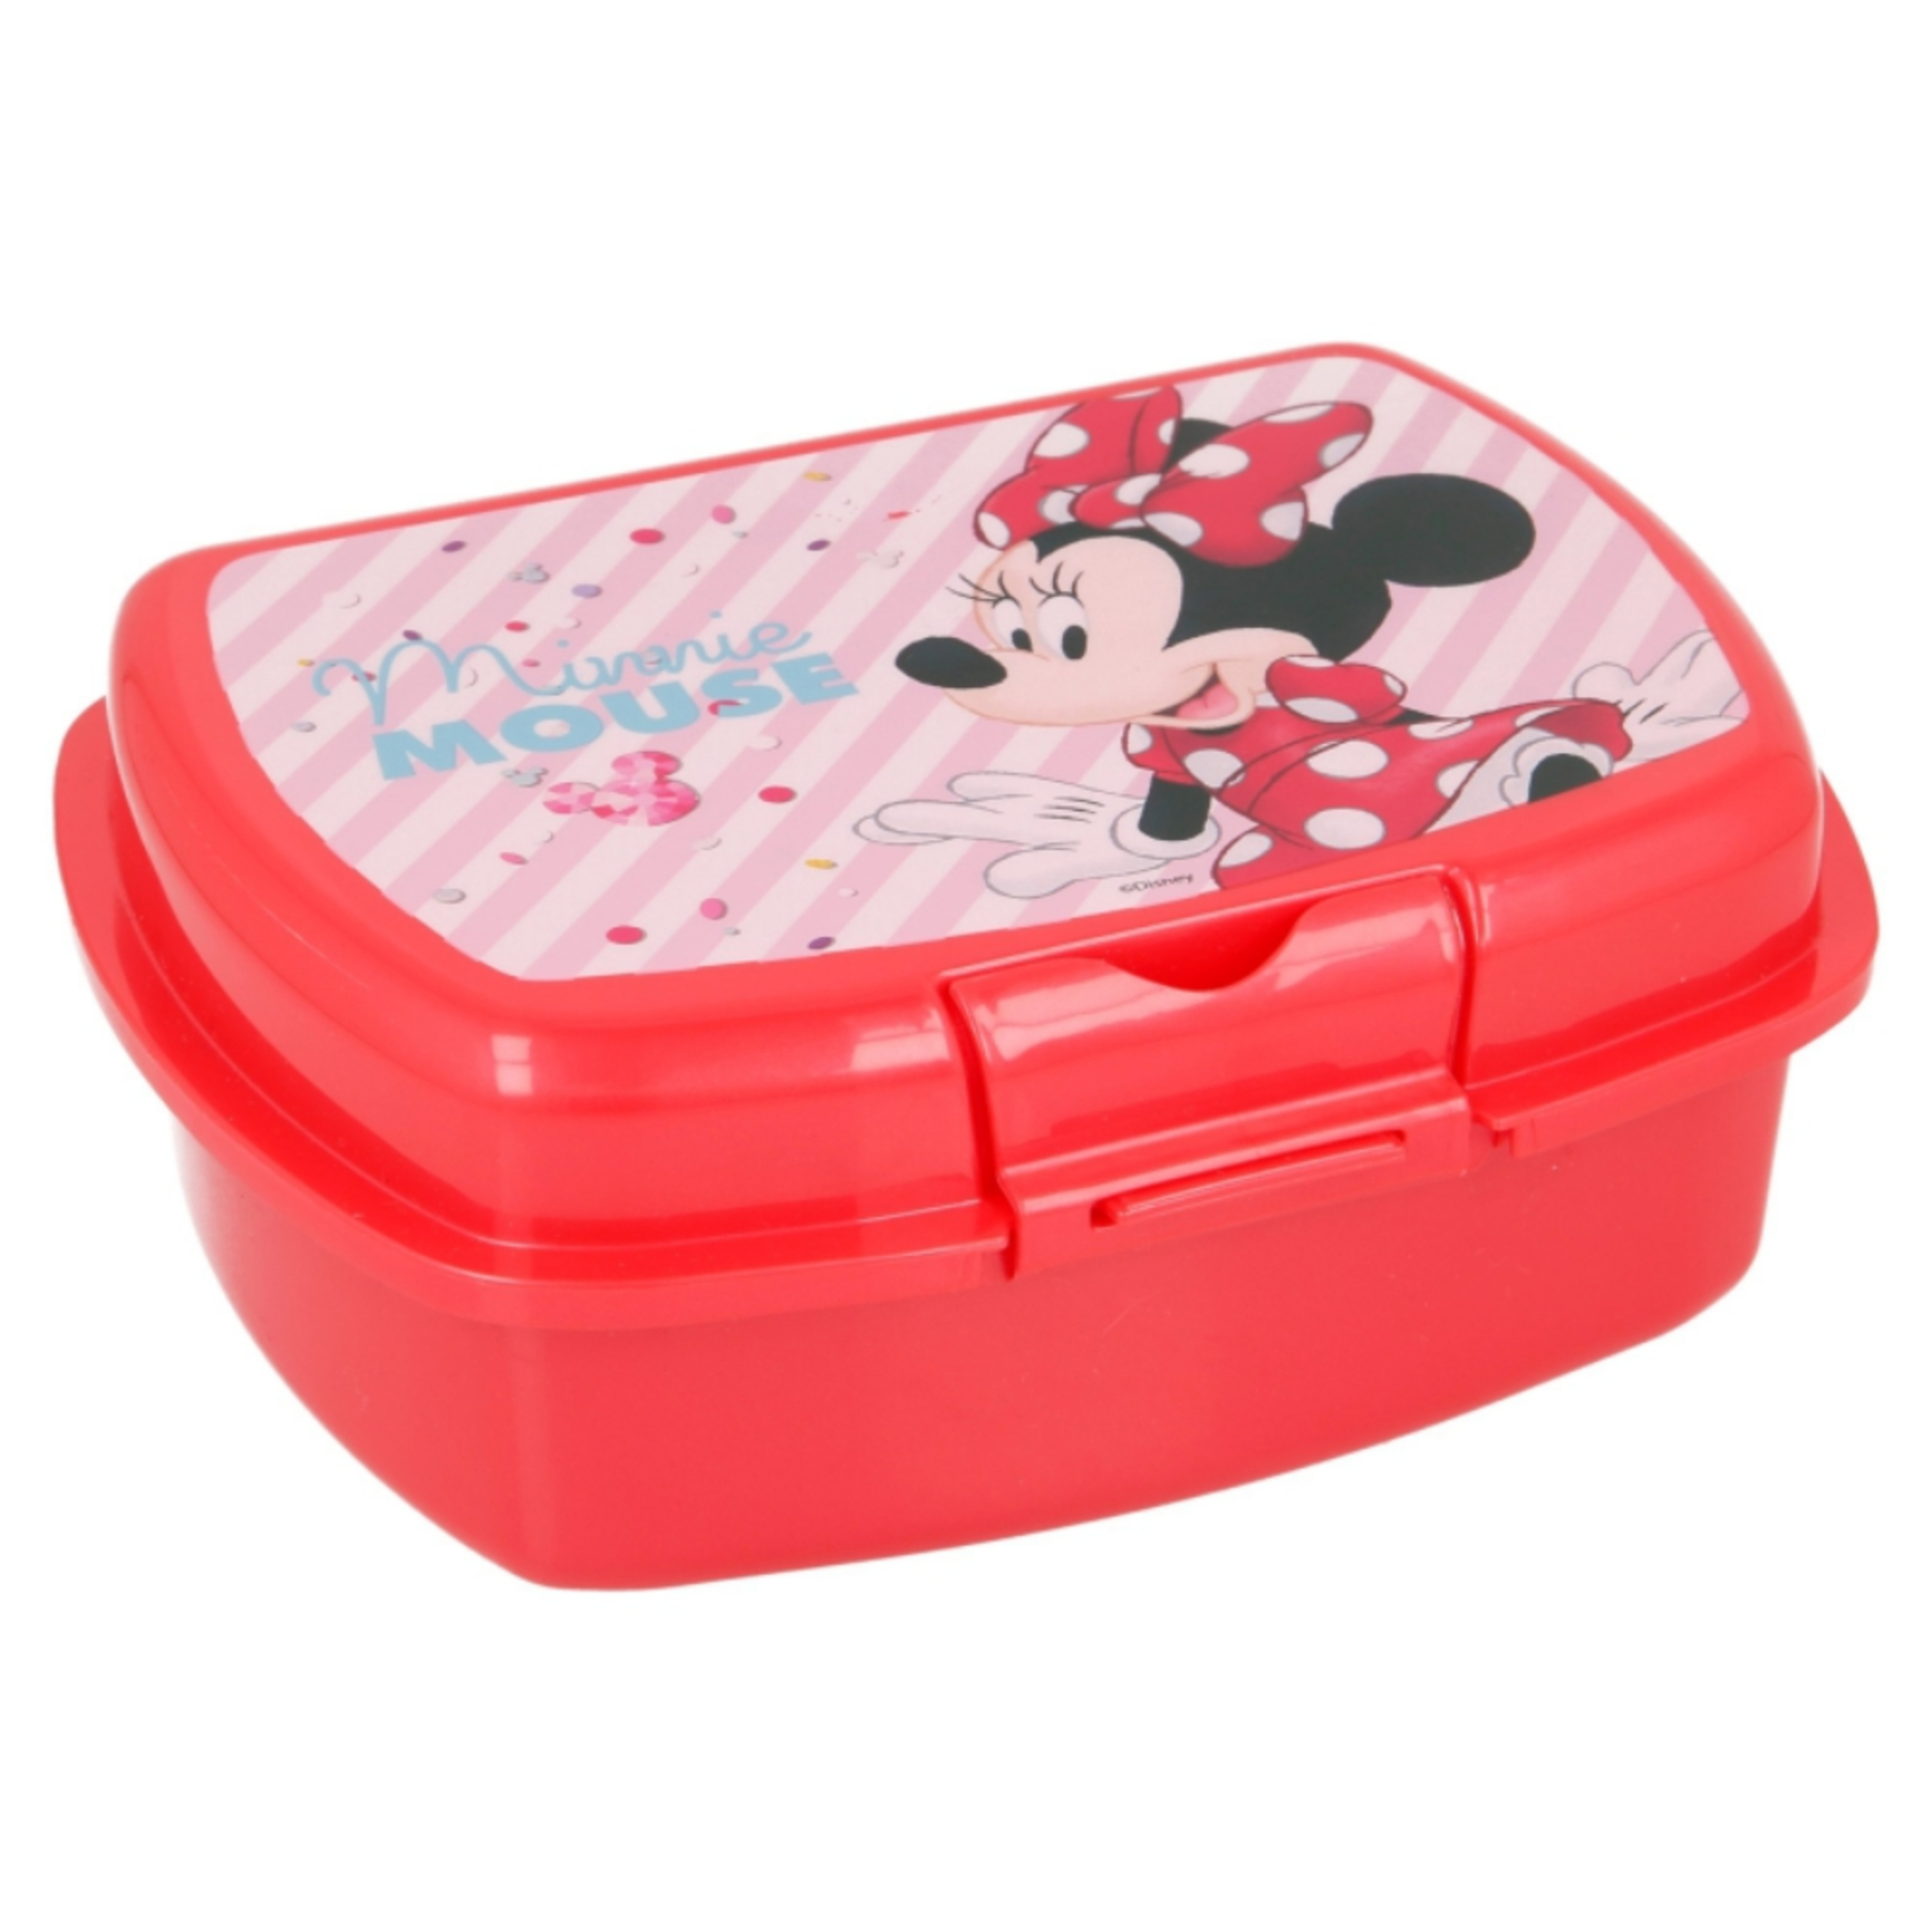 Sandwichera Minnie Mouse 62384 - rojo - 